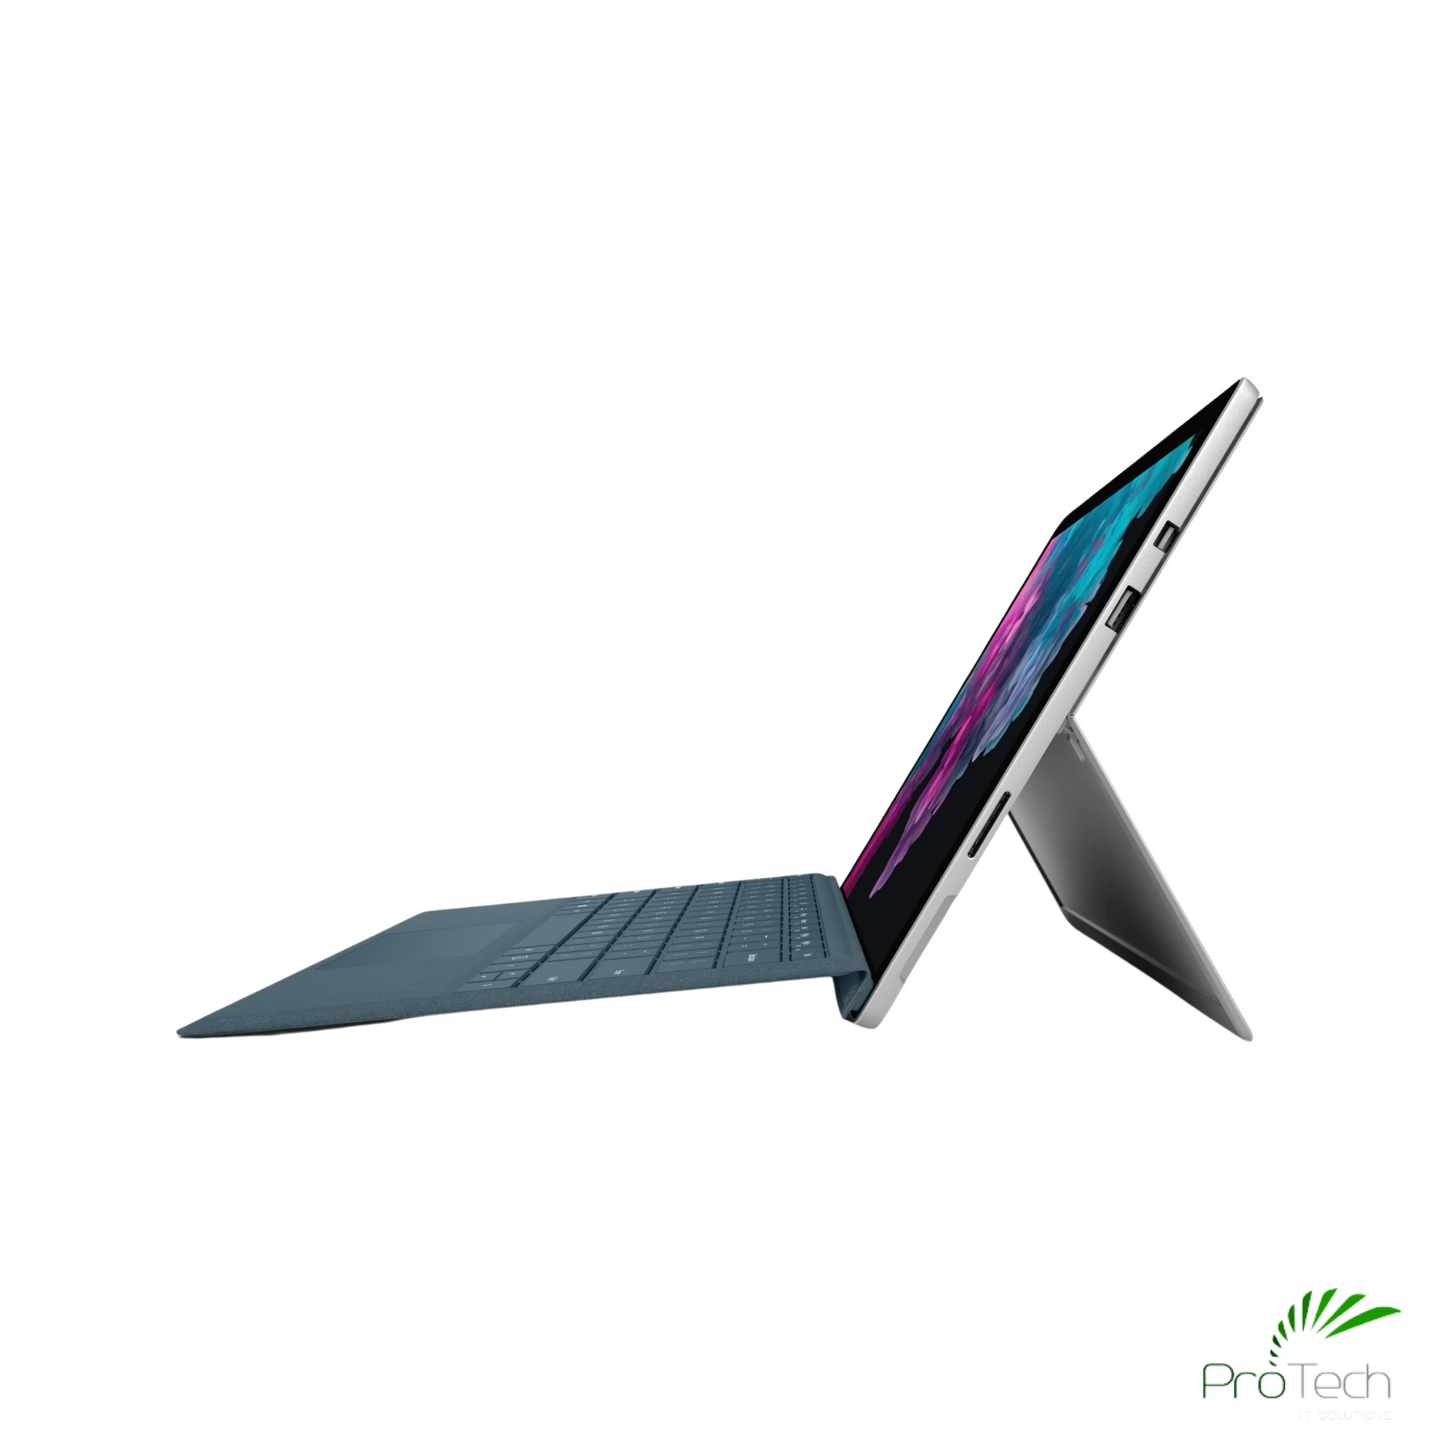 Microsoft Surface Pro 6 | Core i5 | 8th Gen | 8GB RAM | 128GB SSD